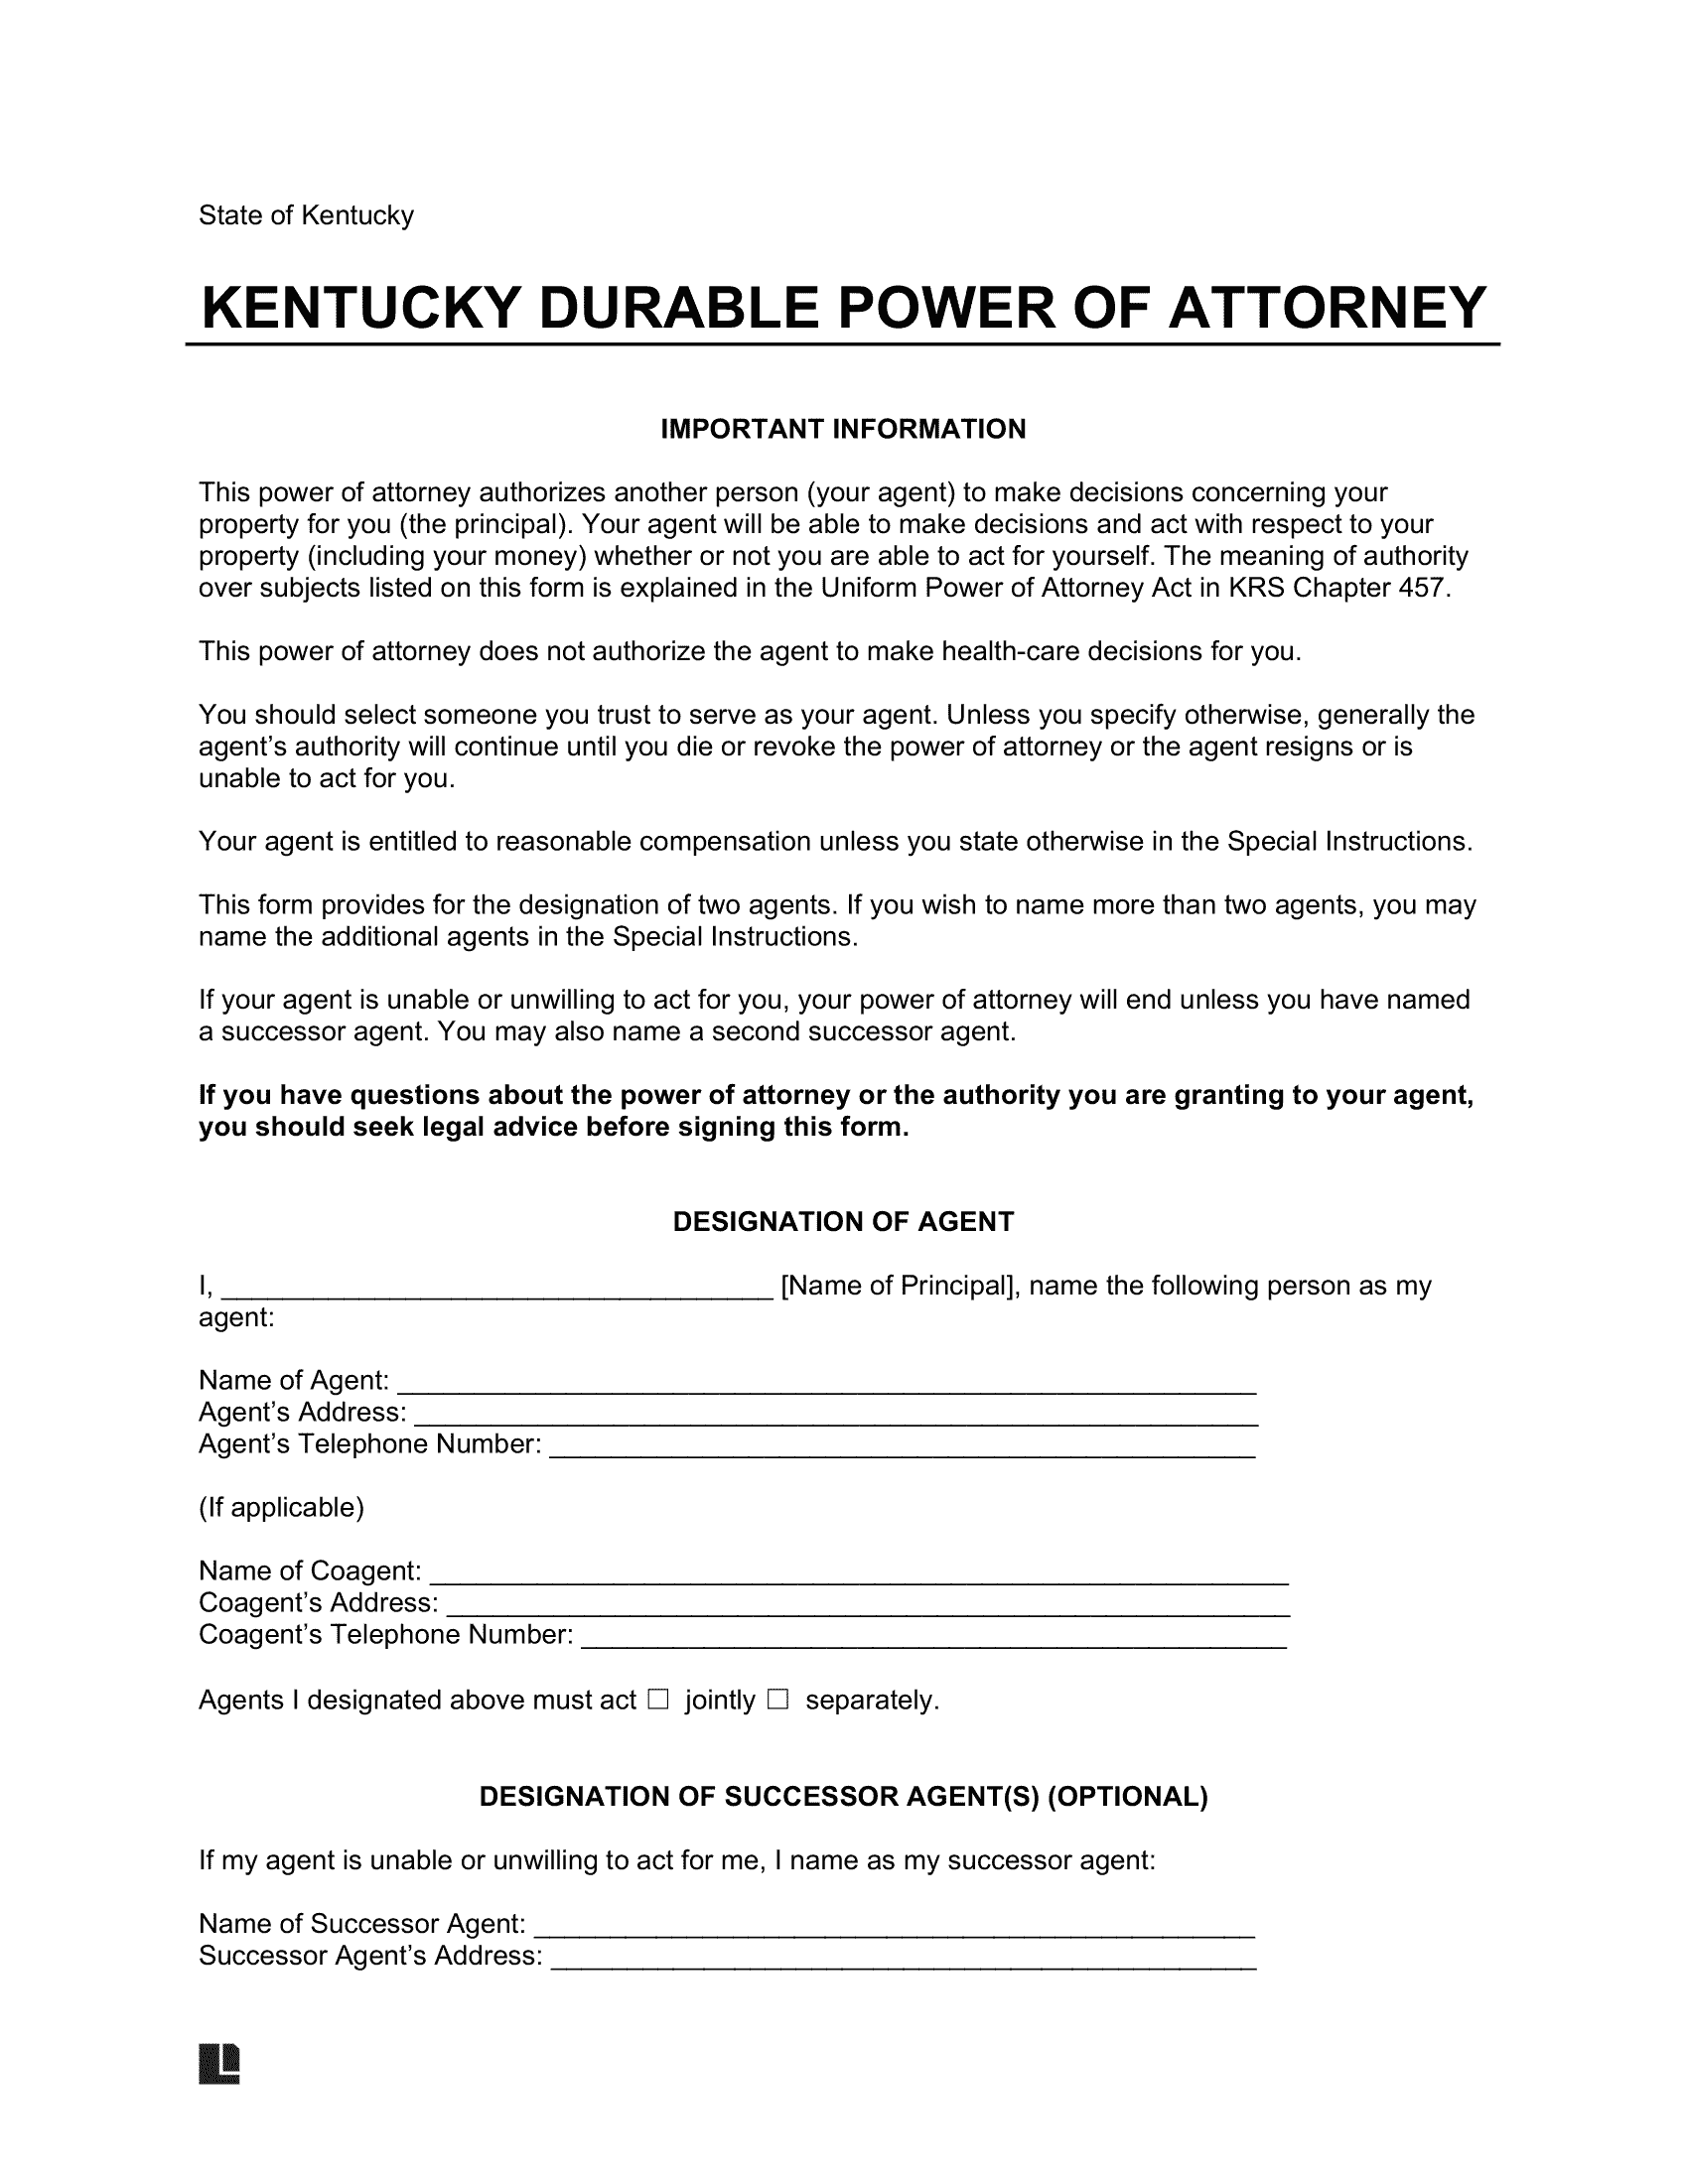 Kentucky Durable Statutory Power of Attorney Template